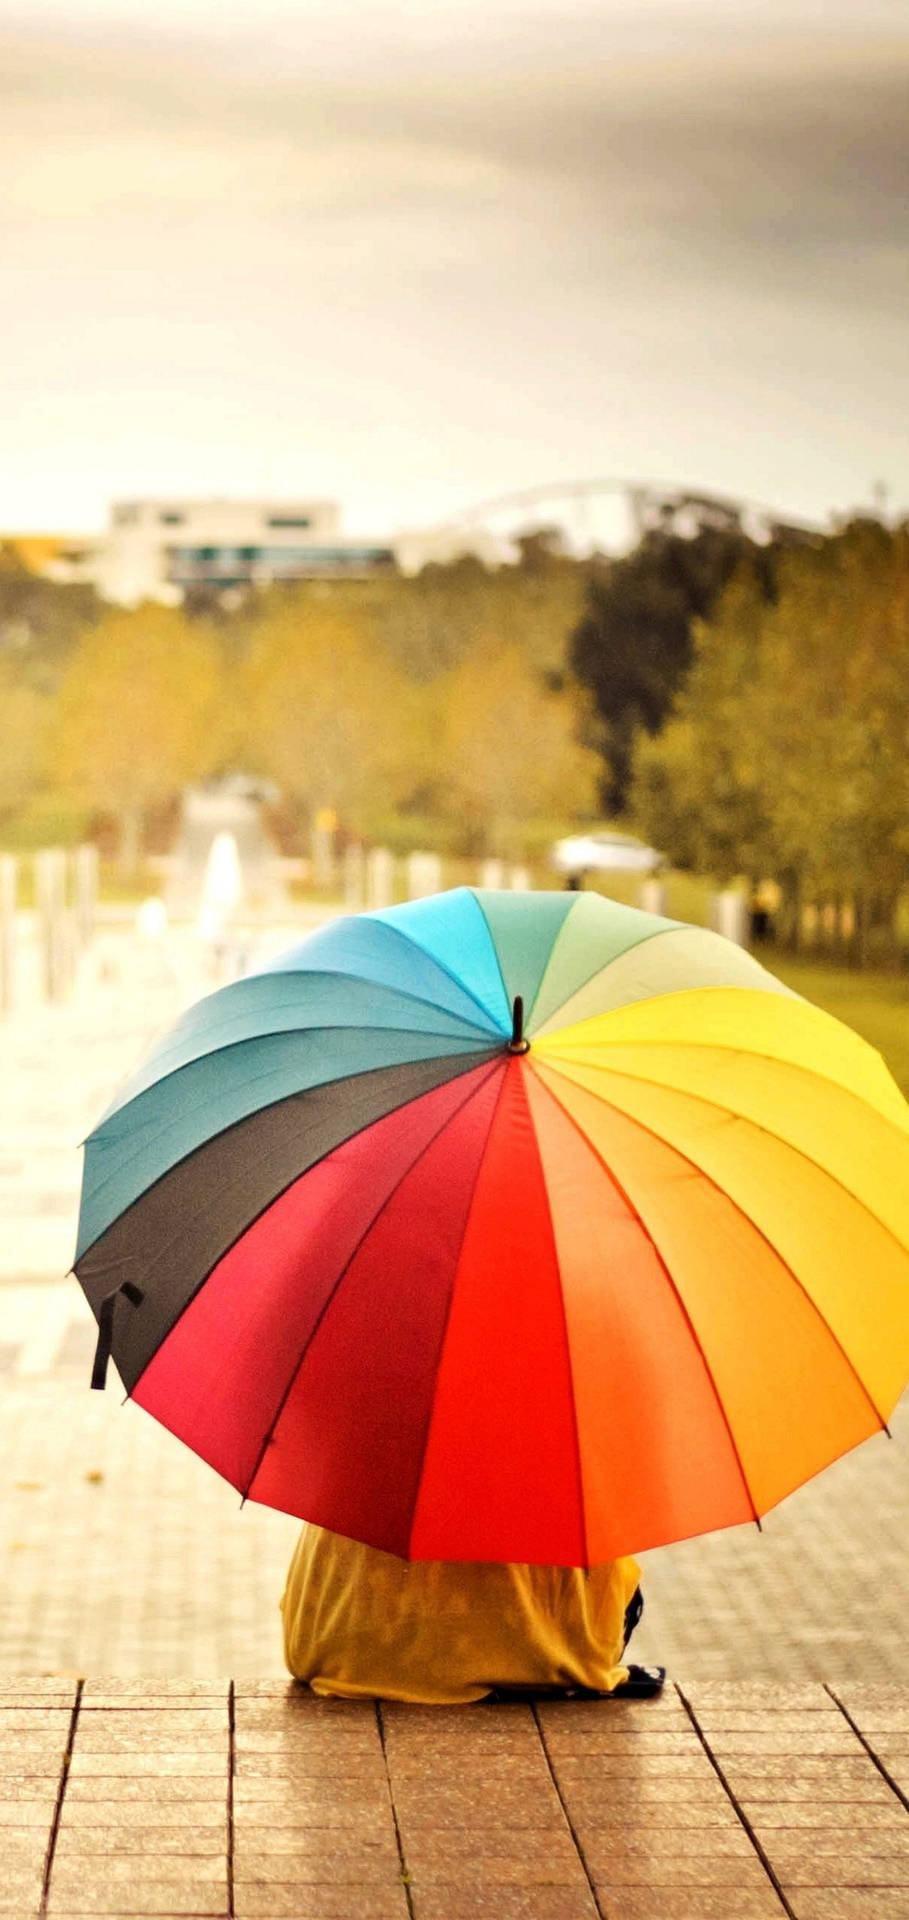 Caption: Vibrant Rainbow Umbrella Against Cloudy Sky Wallpaper